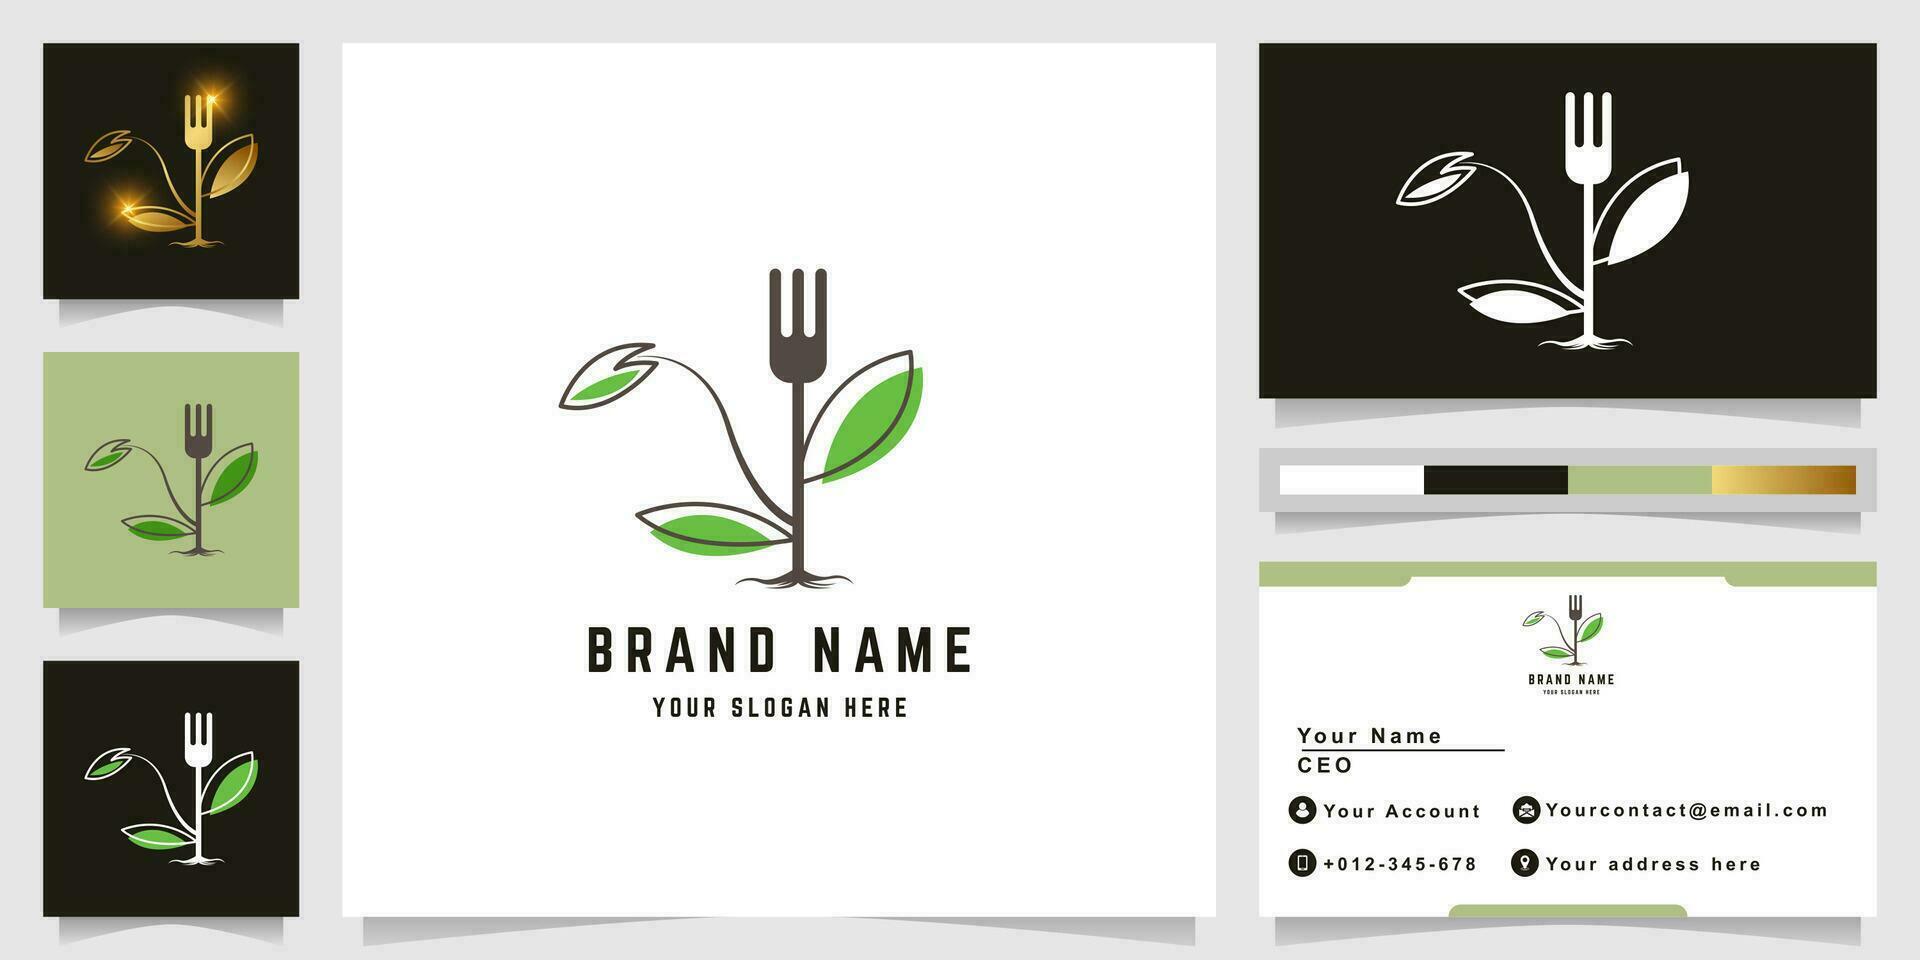 Restaurant or fork nature logo with business card design vector